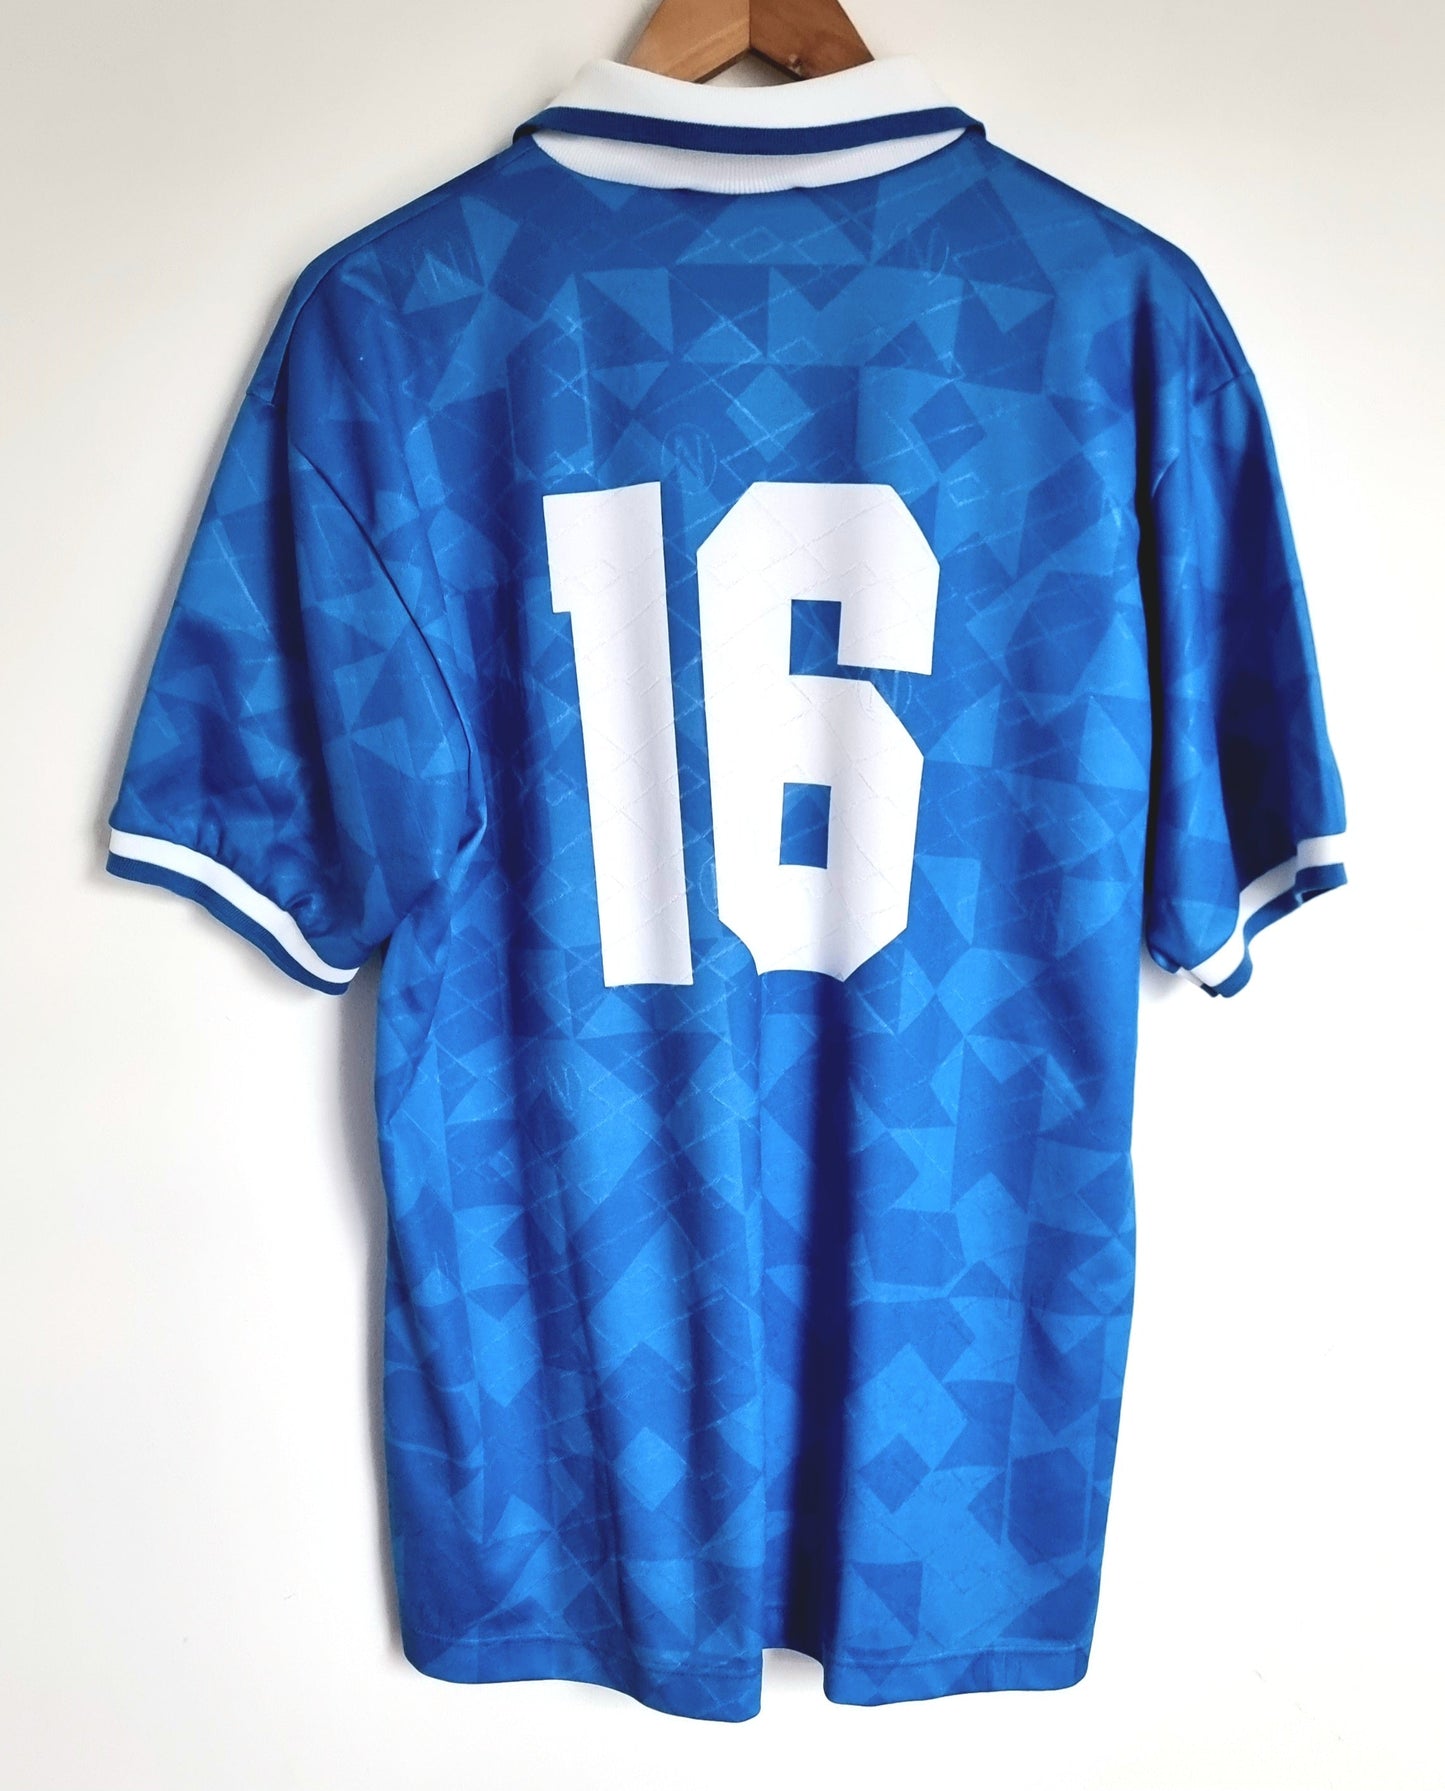 Lotto Napoli 94/95 Match Issue Shirt XL